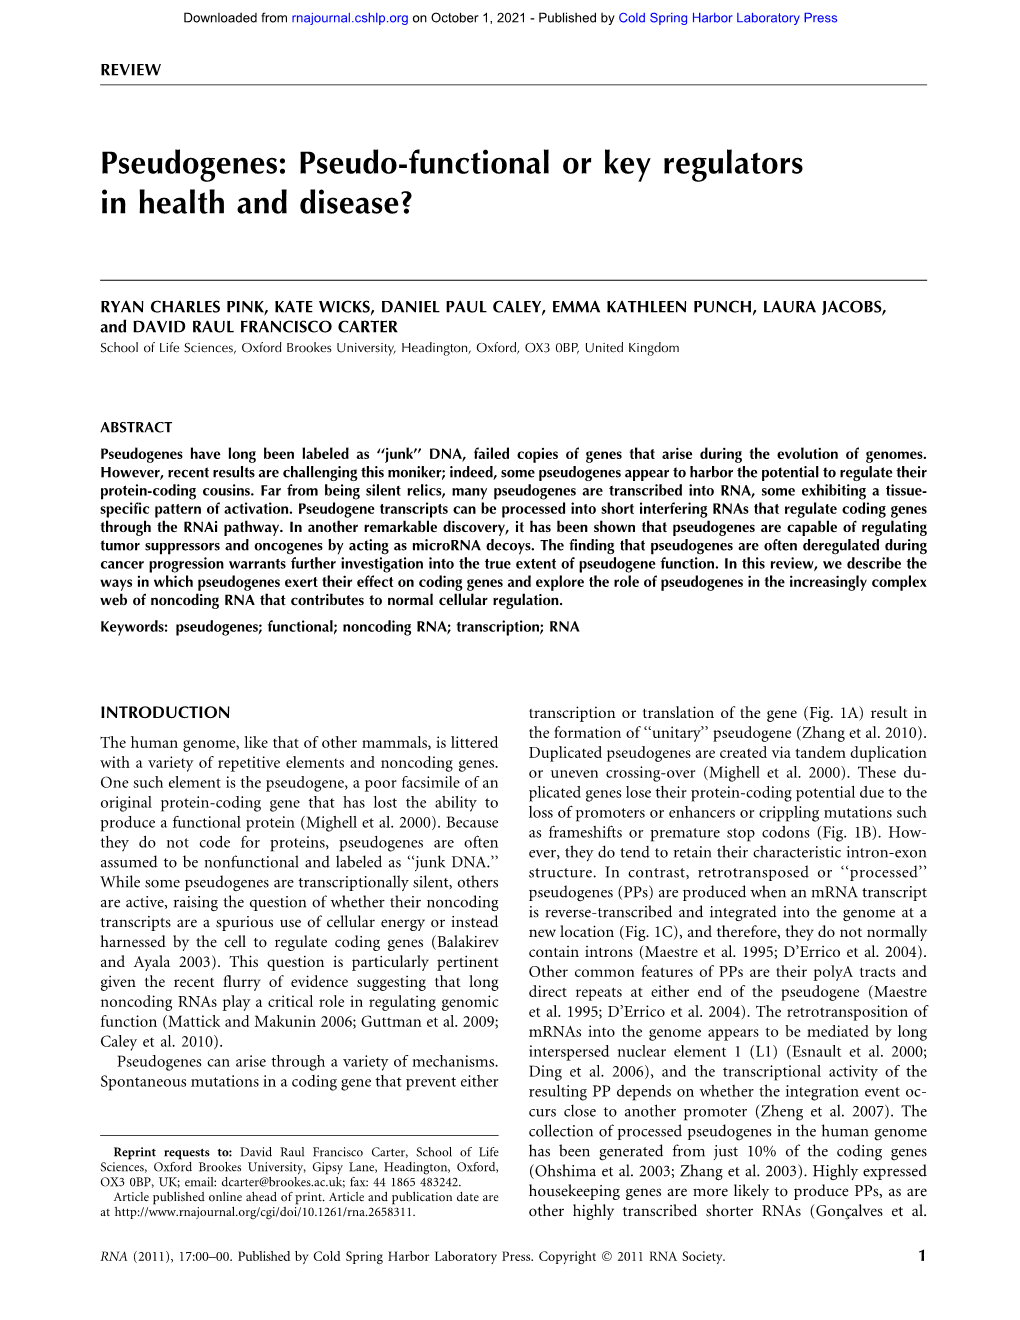 Pseudogenes: Pseudo-Functional Or Key Regulators in Health and Disease?